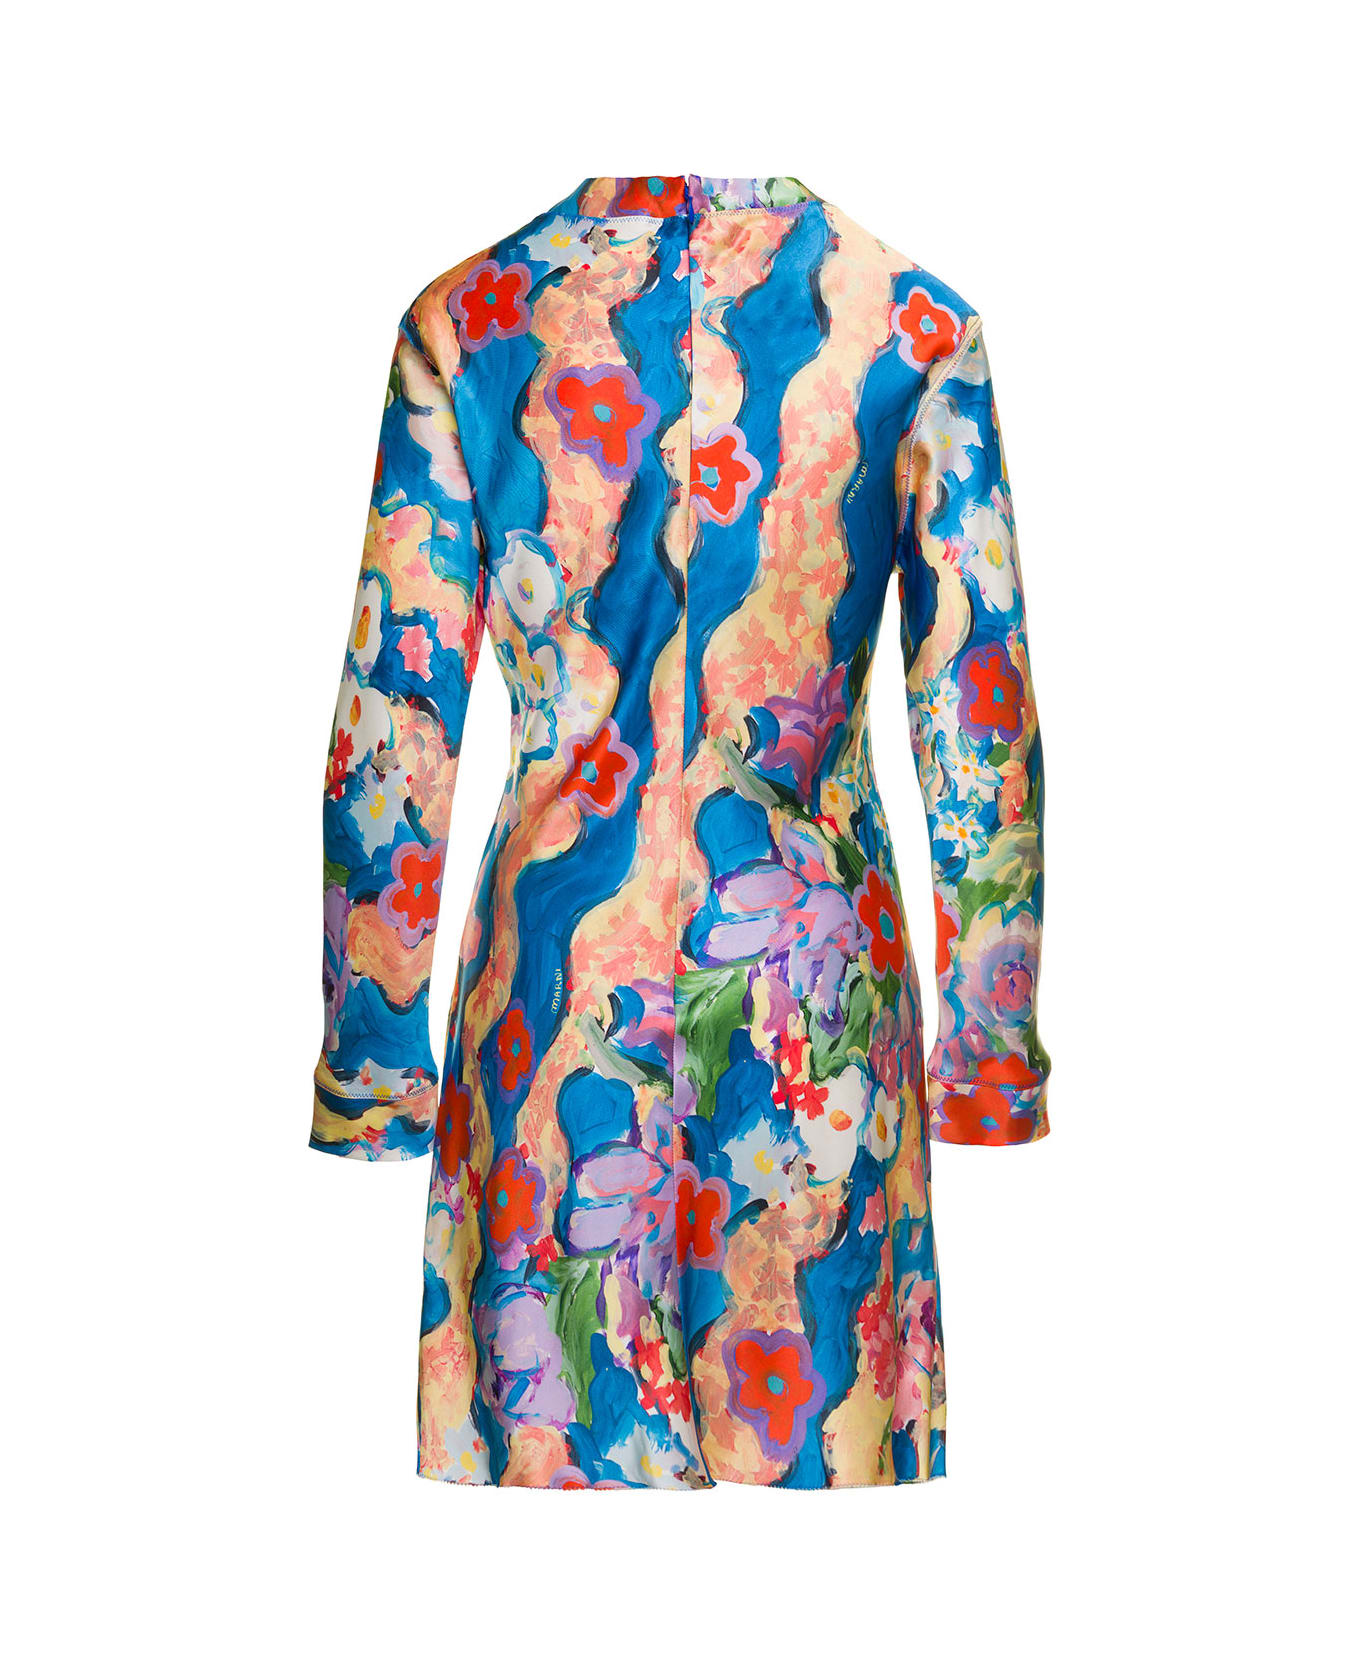 Marni Multicolor Long Sleeves Mini Dress With Julie Print Woman Marni - Multicolor